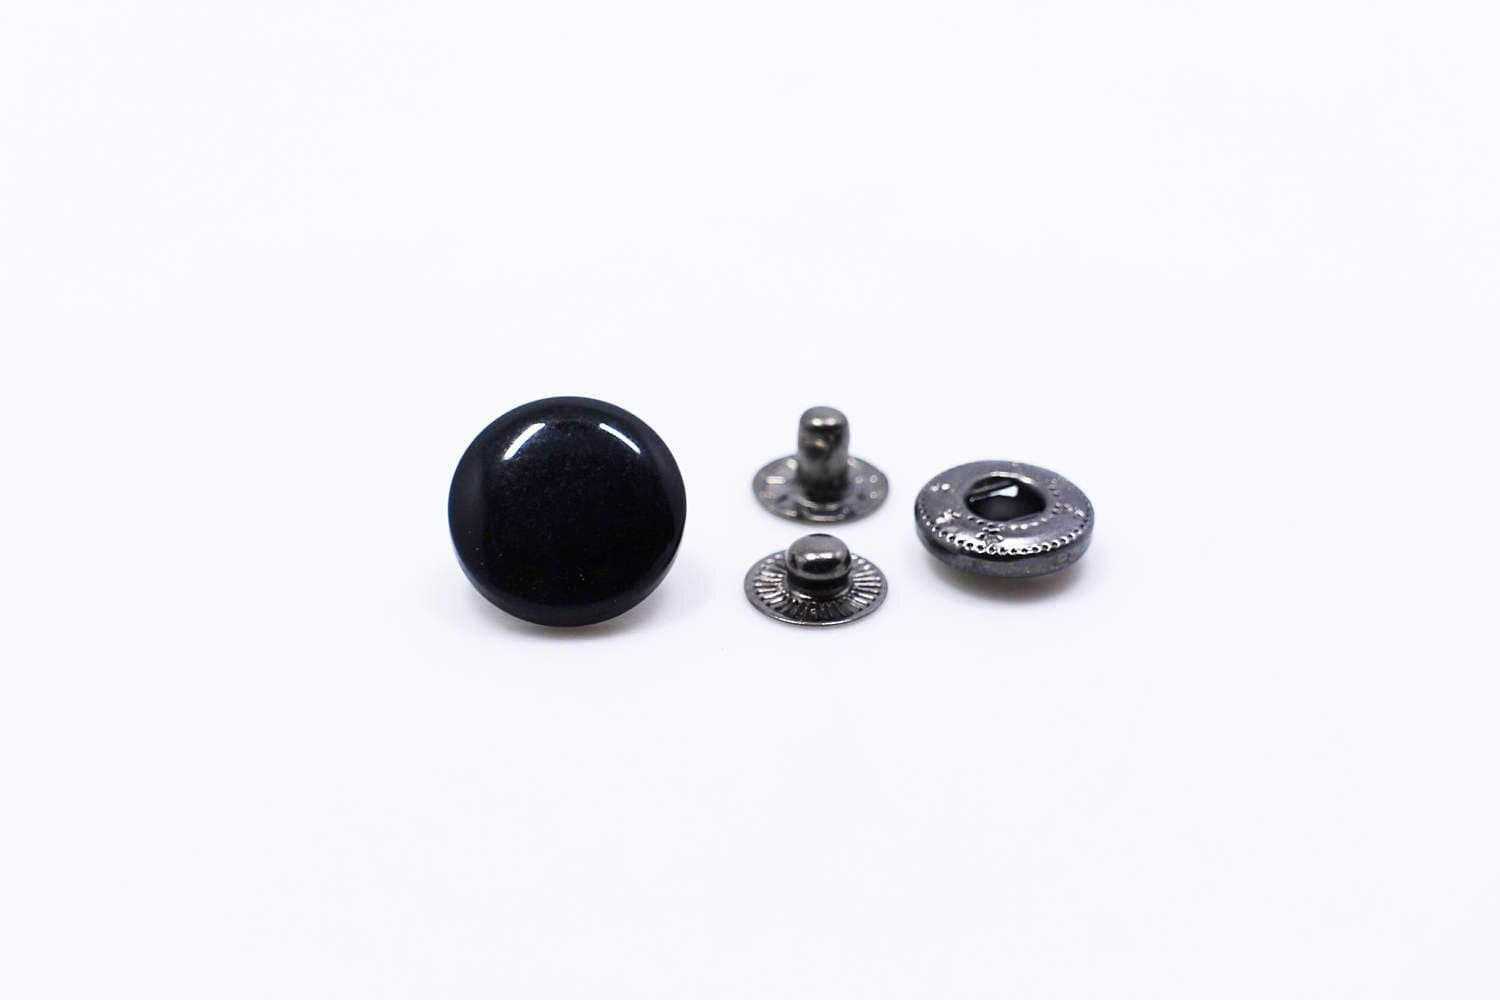 Black Velcro Brand 3/4 1.9 Cm Circle Sticky Back Fasteners Peel